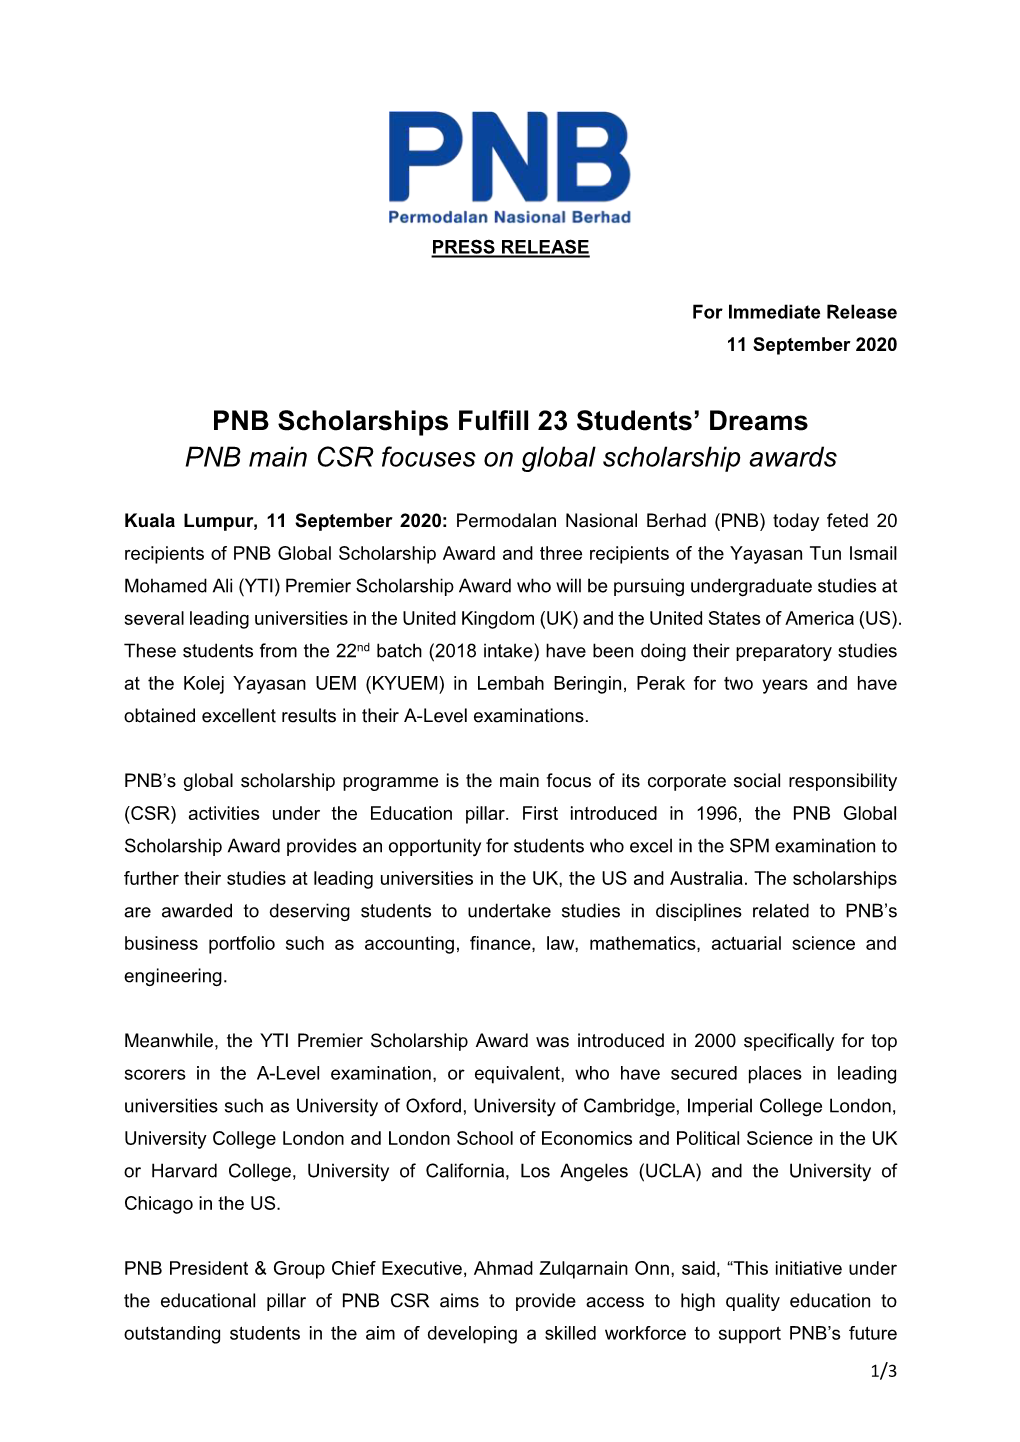 PNB Scholarships Fulfill 23 Students' Dreams PNB Main CSR Focuses On